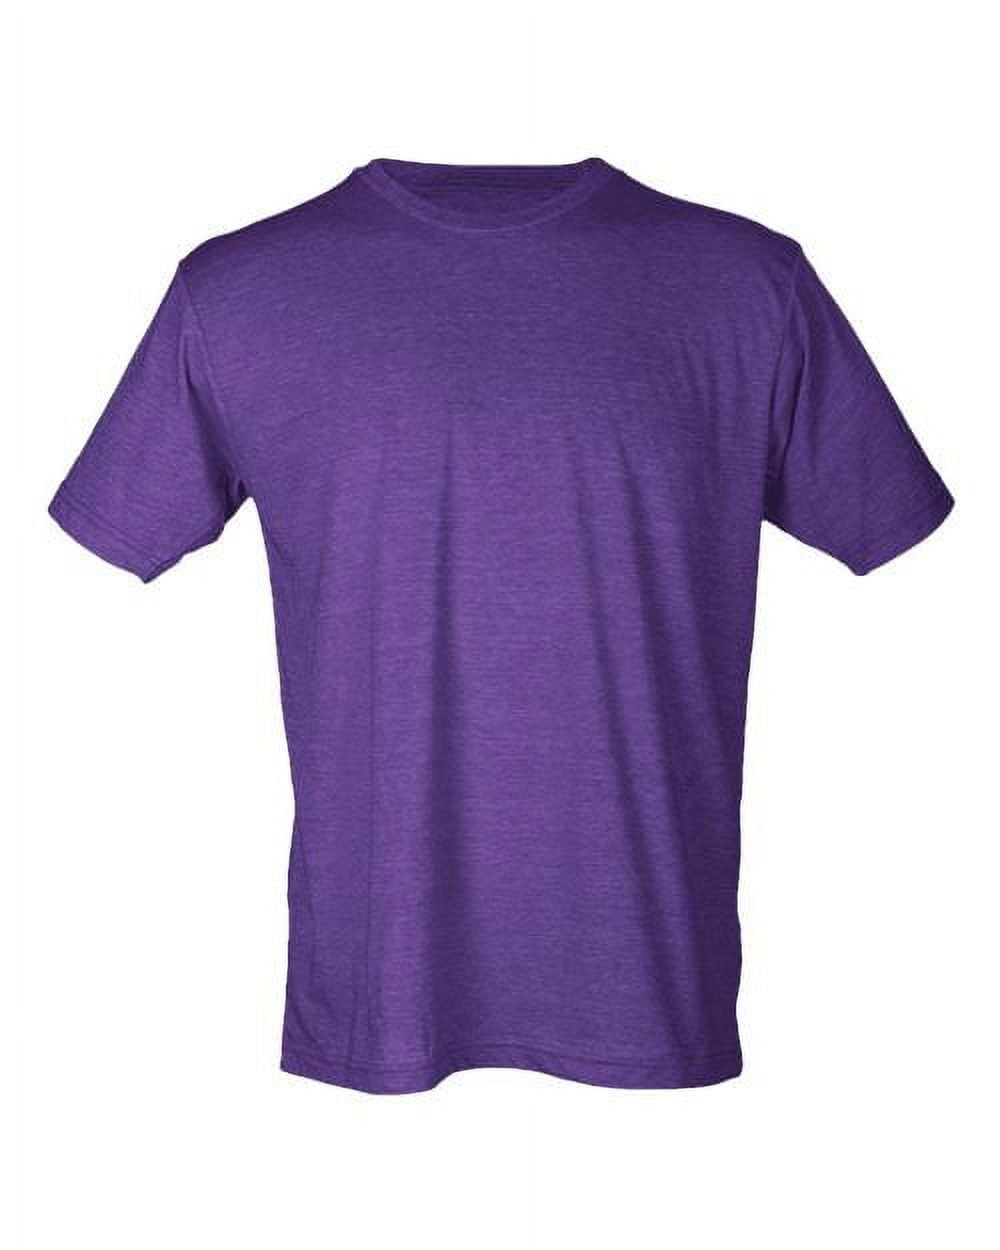 Tultex 241 - Unisex Poly-Rich T-Shirt - Heather Purple 3XL